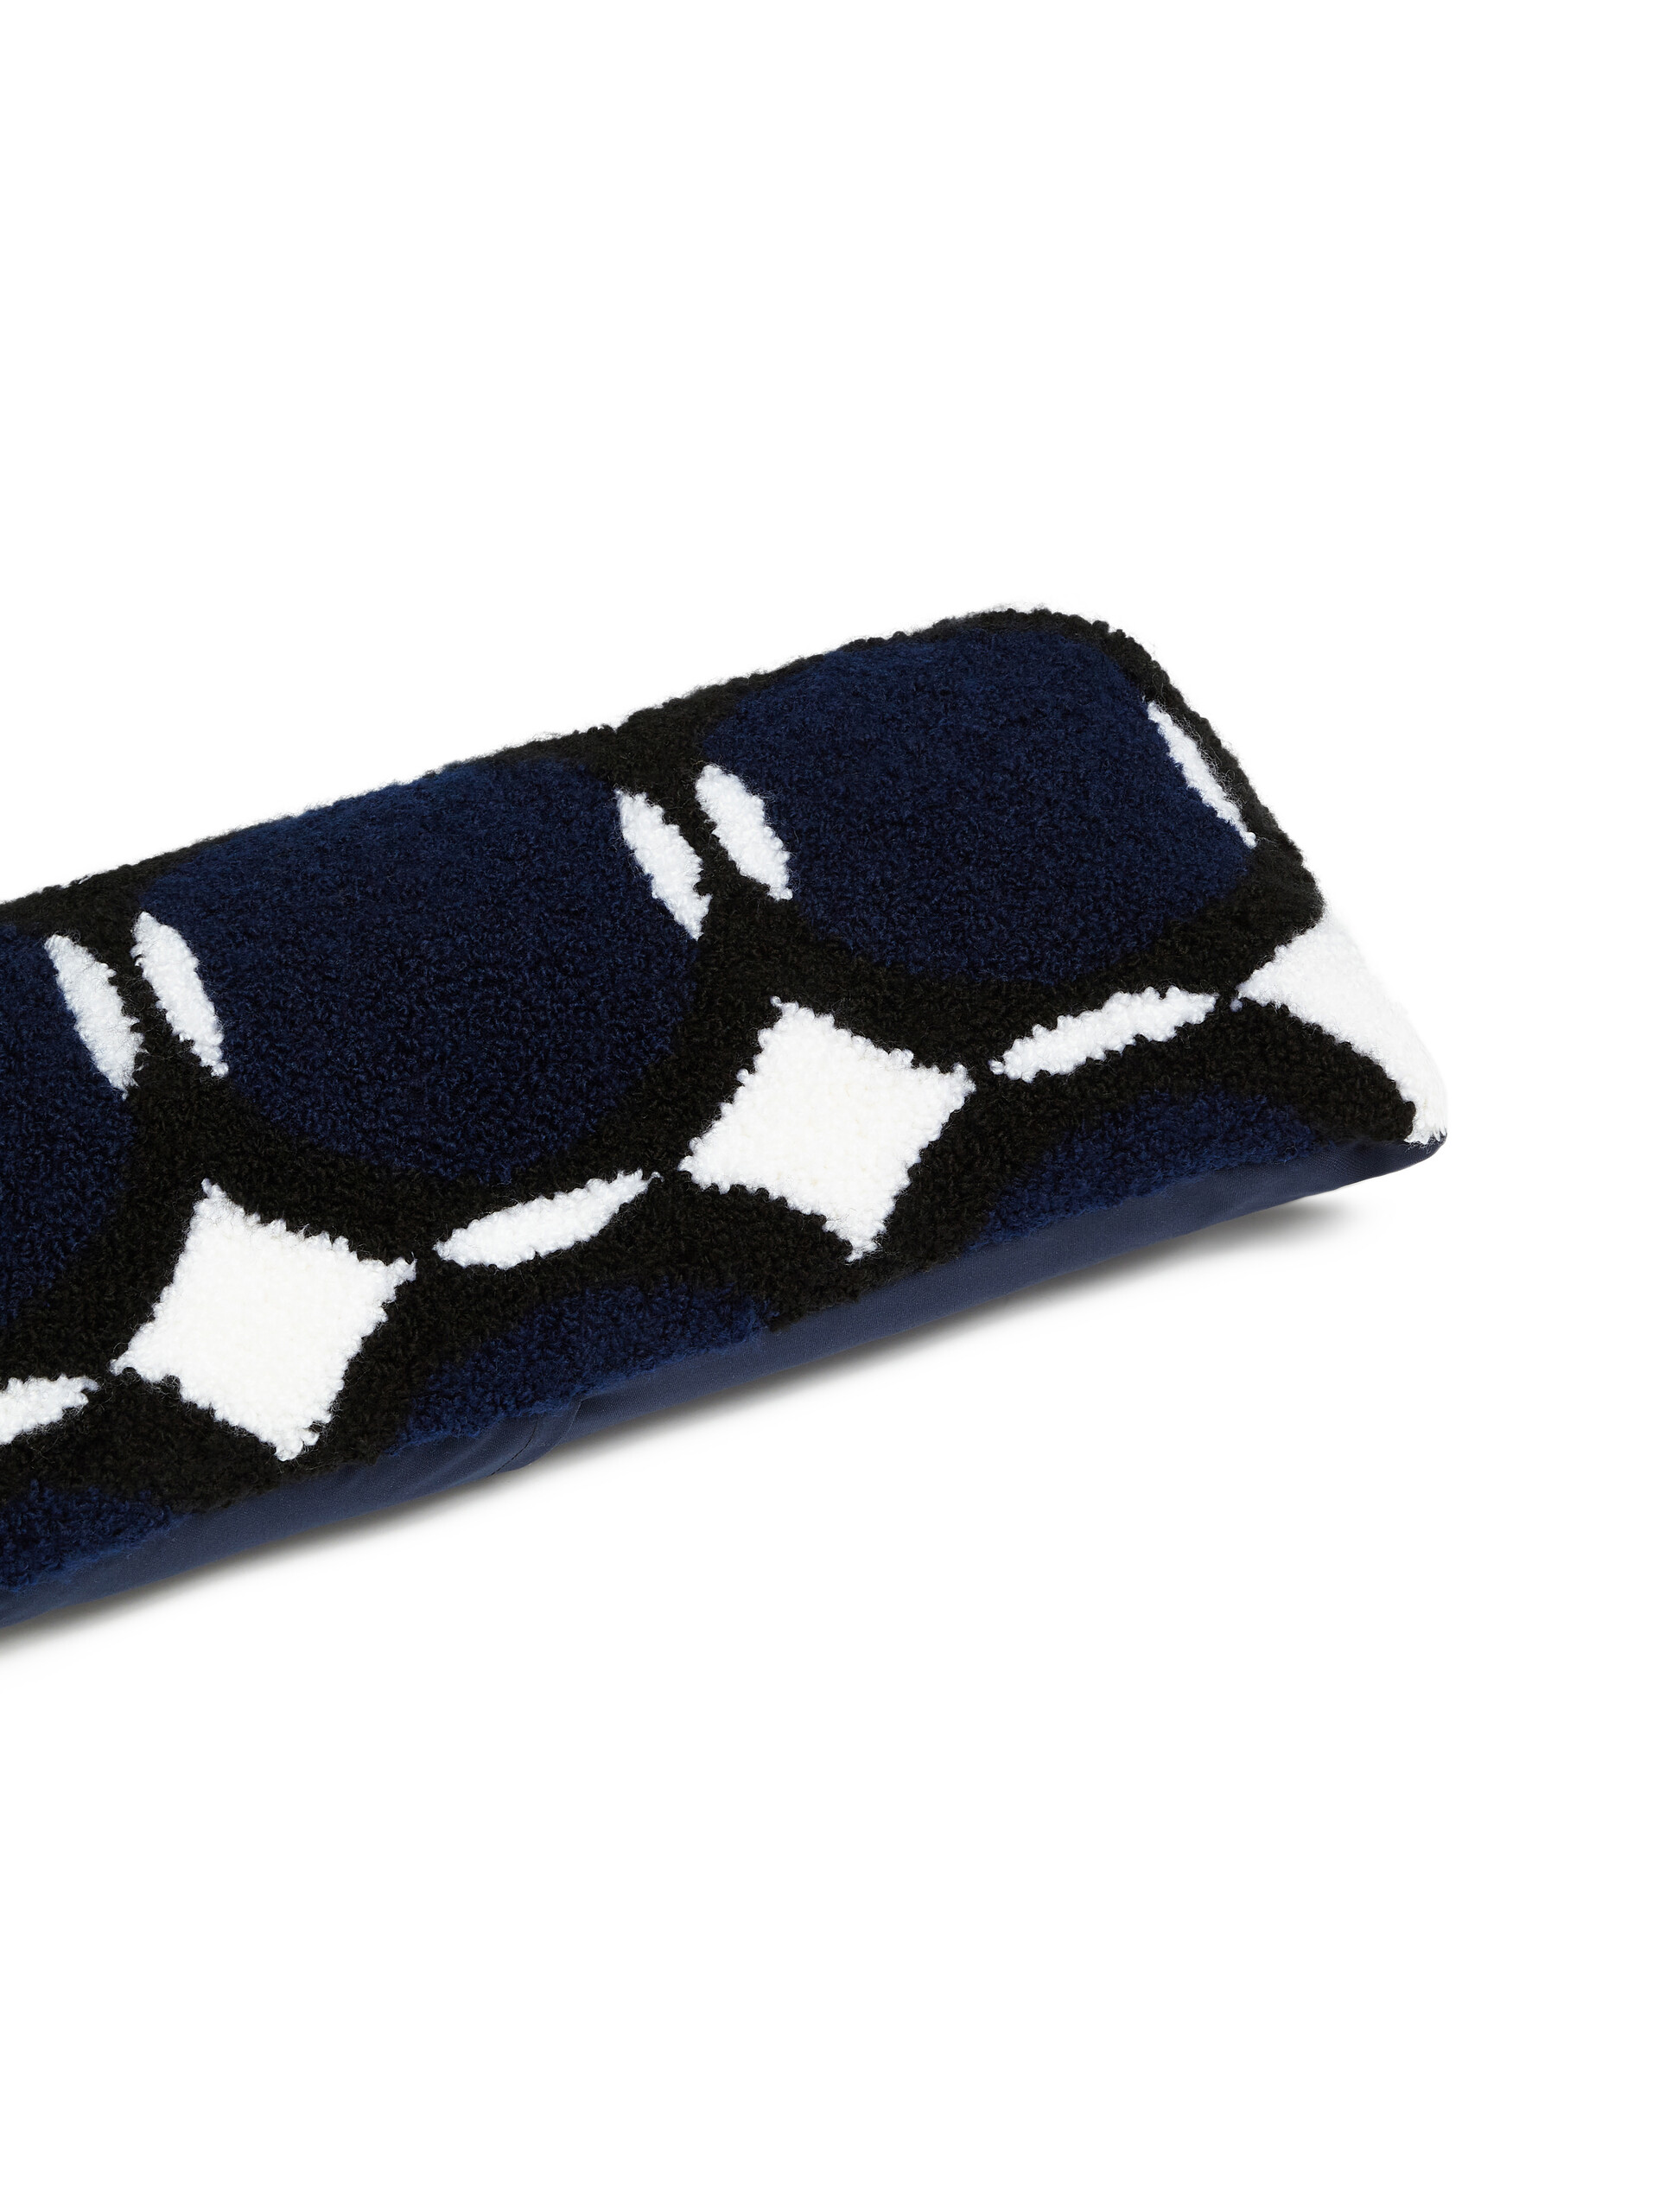 MARNI MARKET patterned cushion - Furniture - Image 3